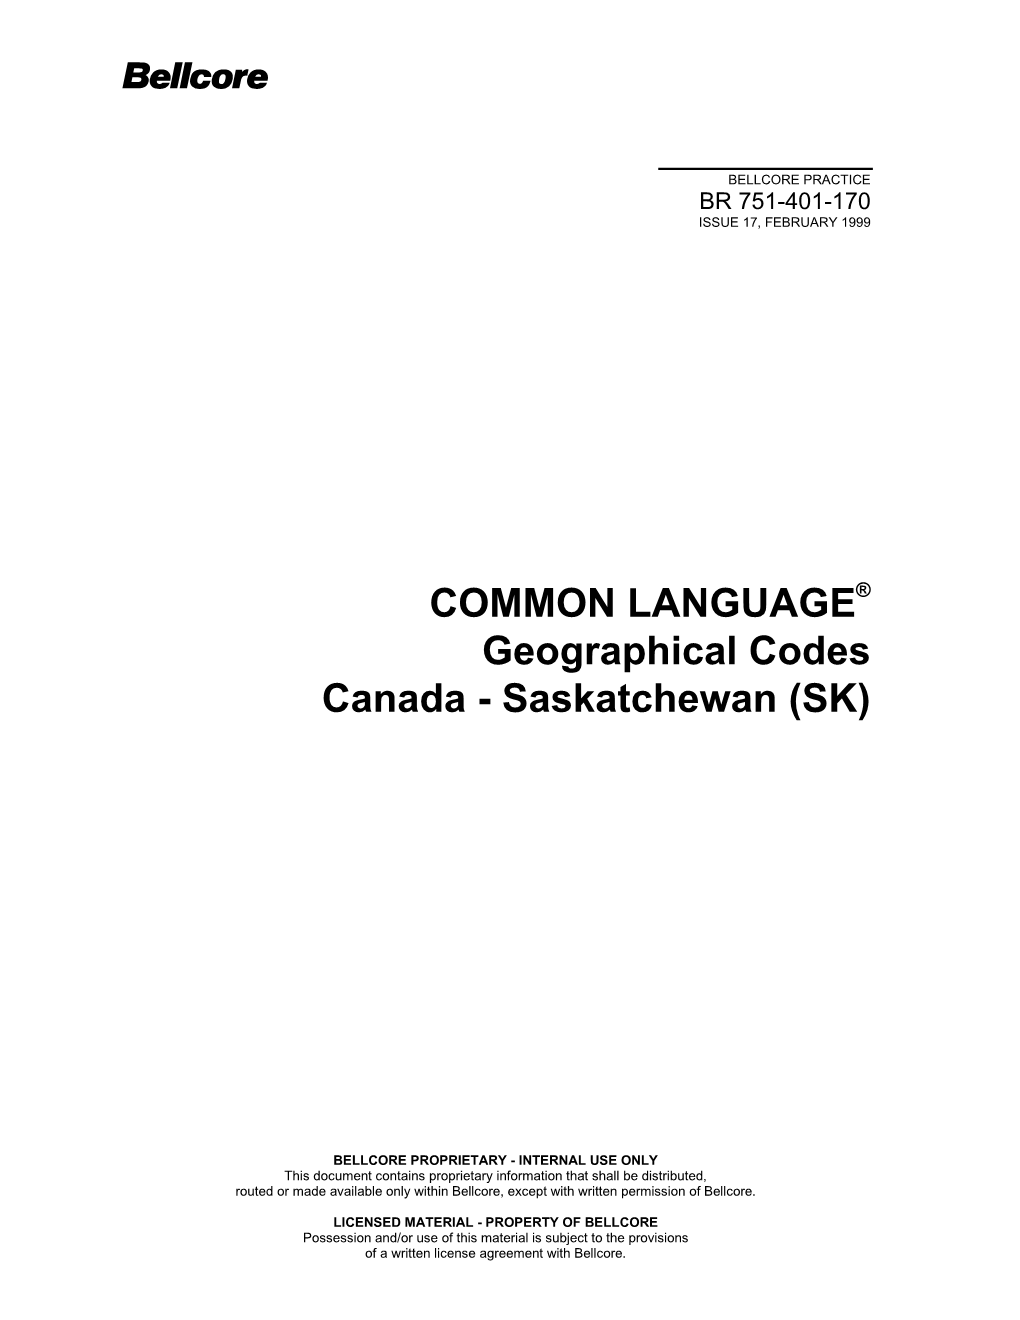 Geographical Codes Canada - Saskatchewan (SK)